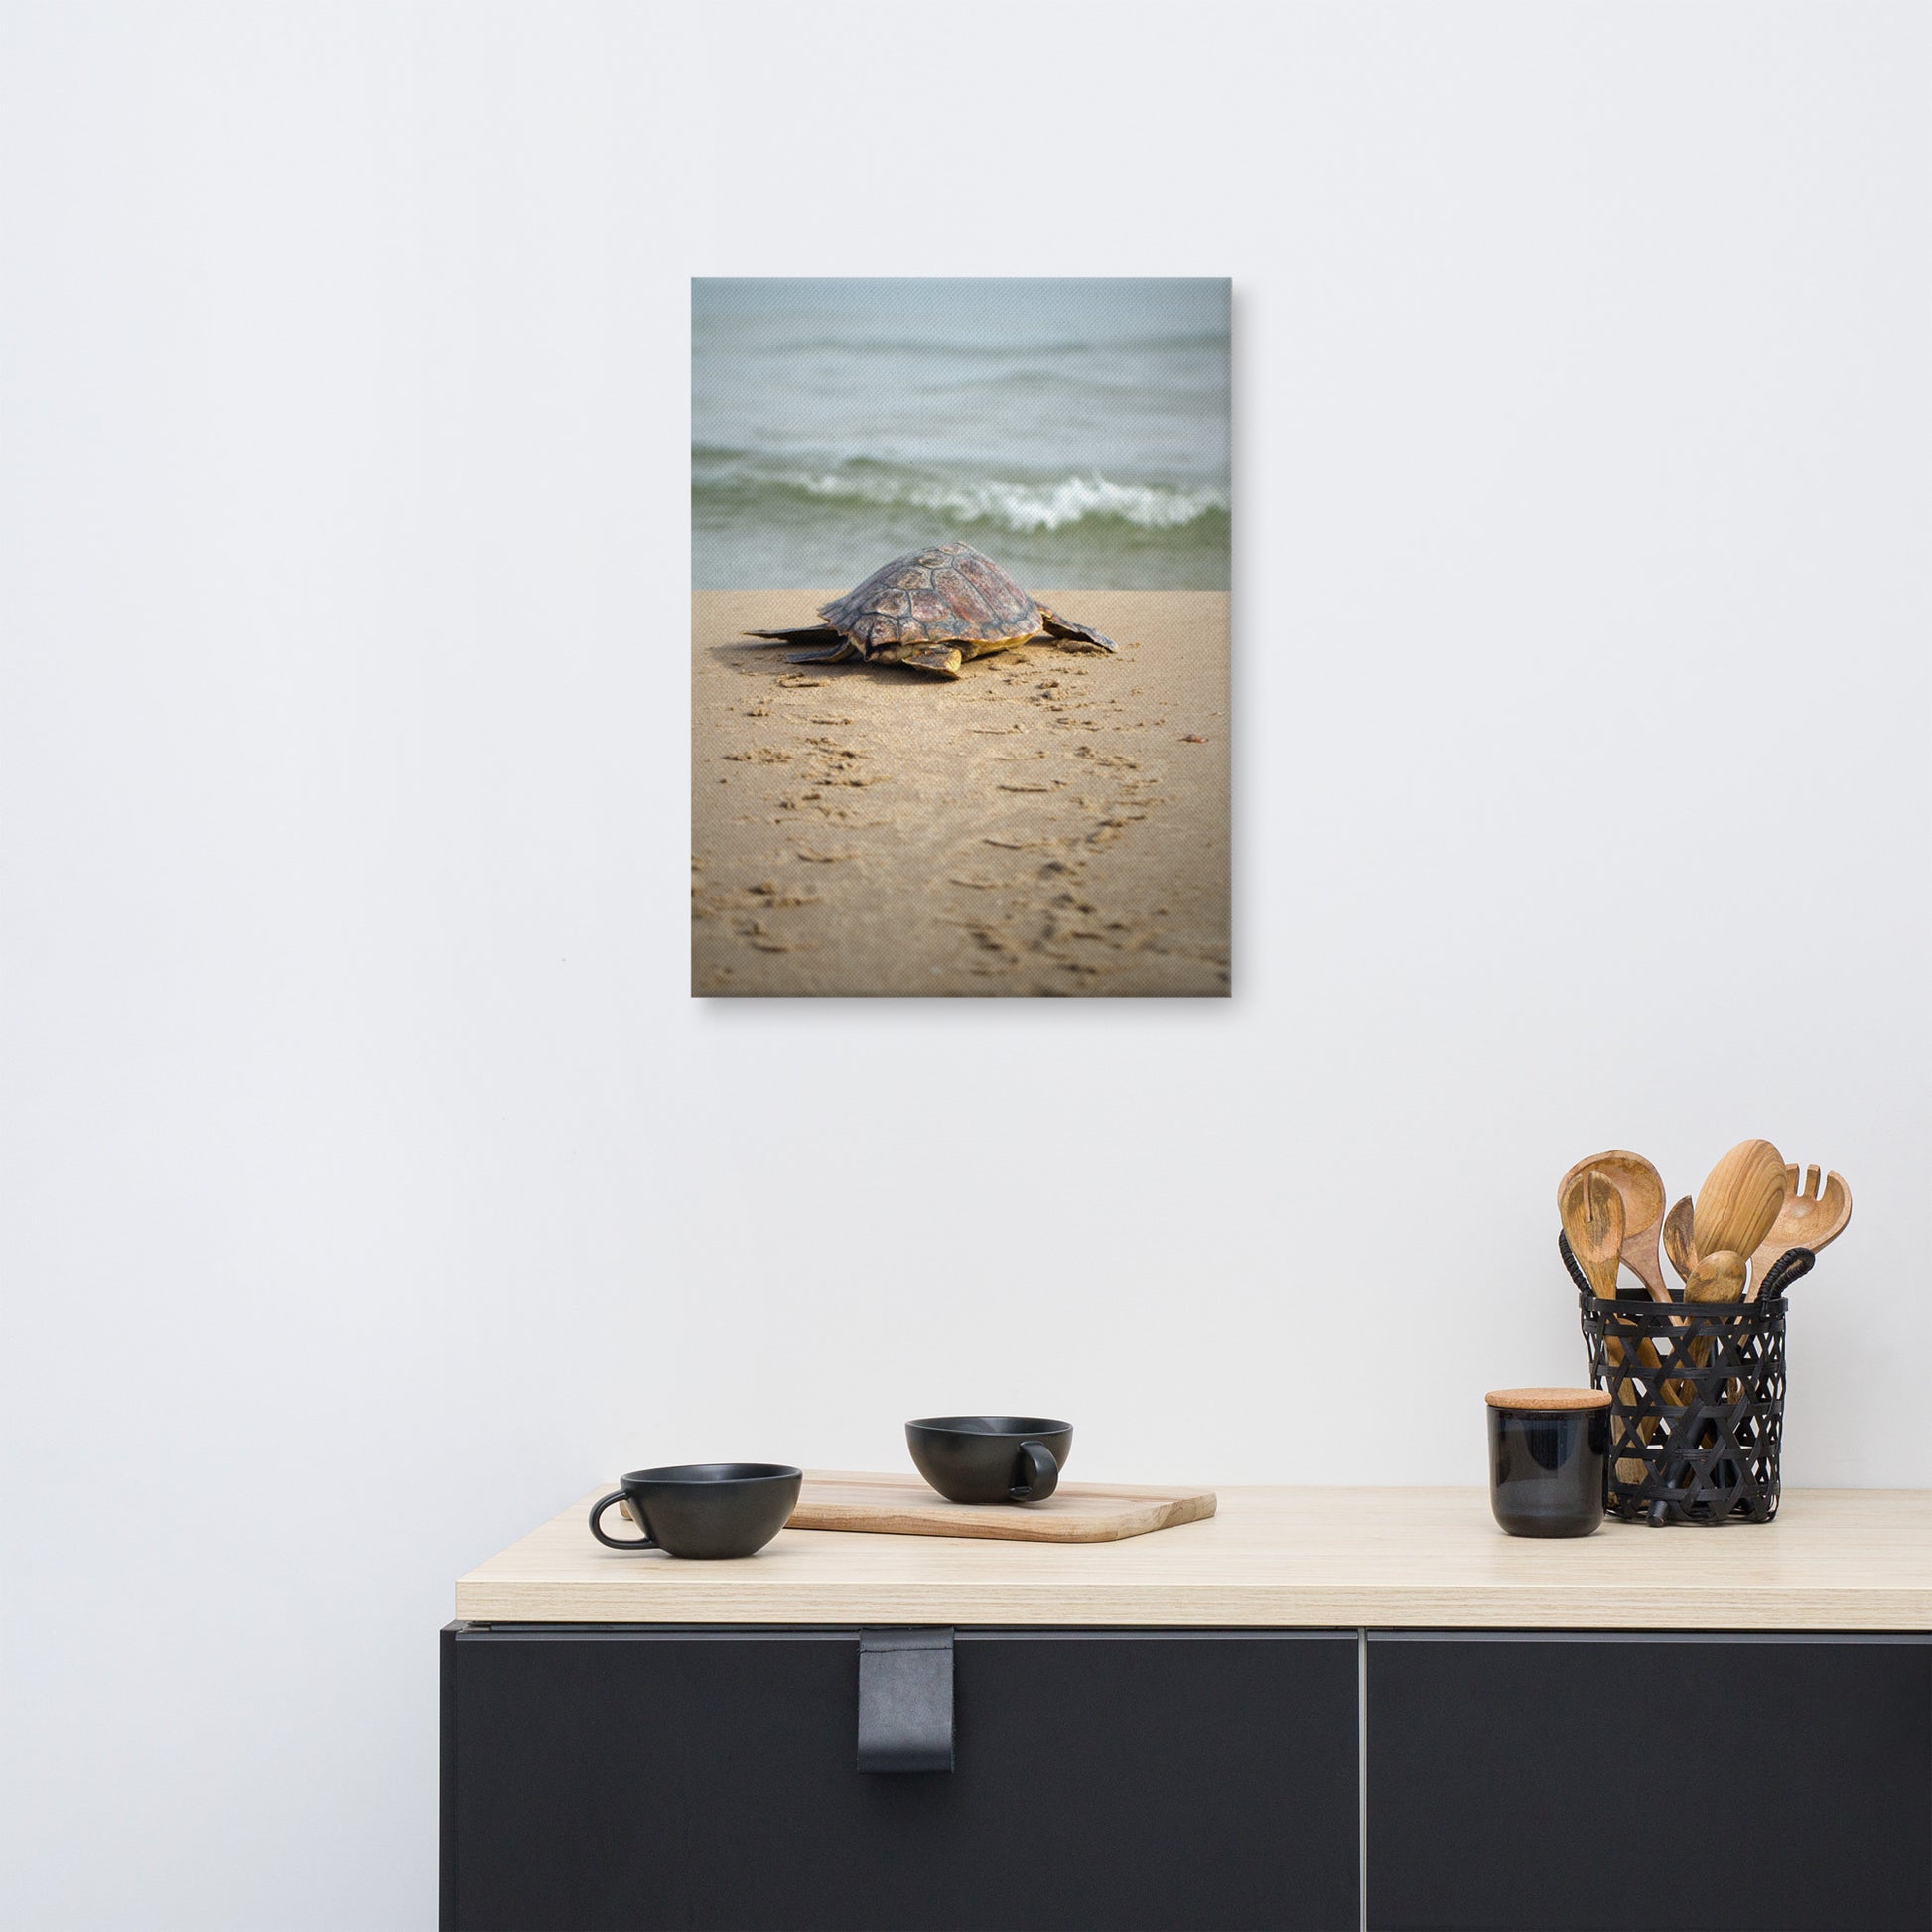 Beach Kitchen Wall Decor: Baby Loggerhead Sea Turtle Hatchling at the Shore - Coastal / Wildlife / Marine Animal / Nature Photograph Canvas Wall Art Print - Artwork